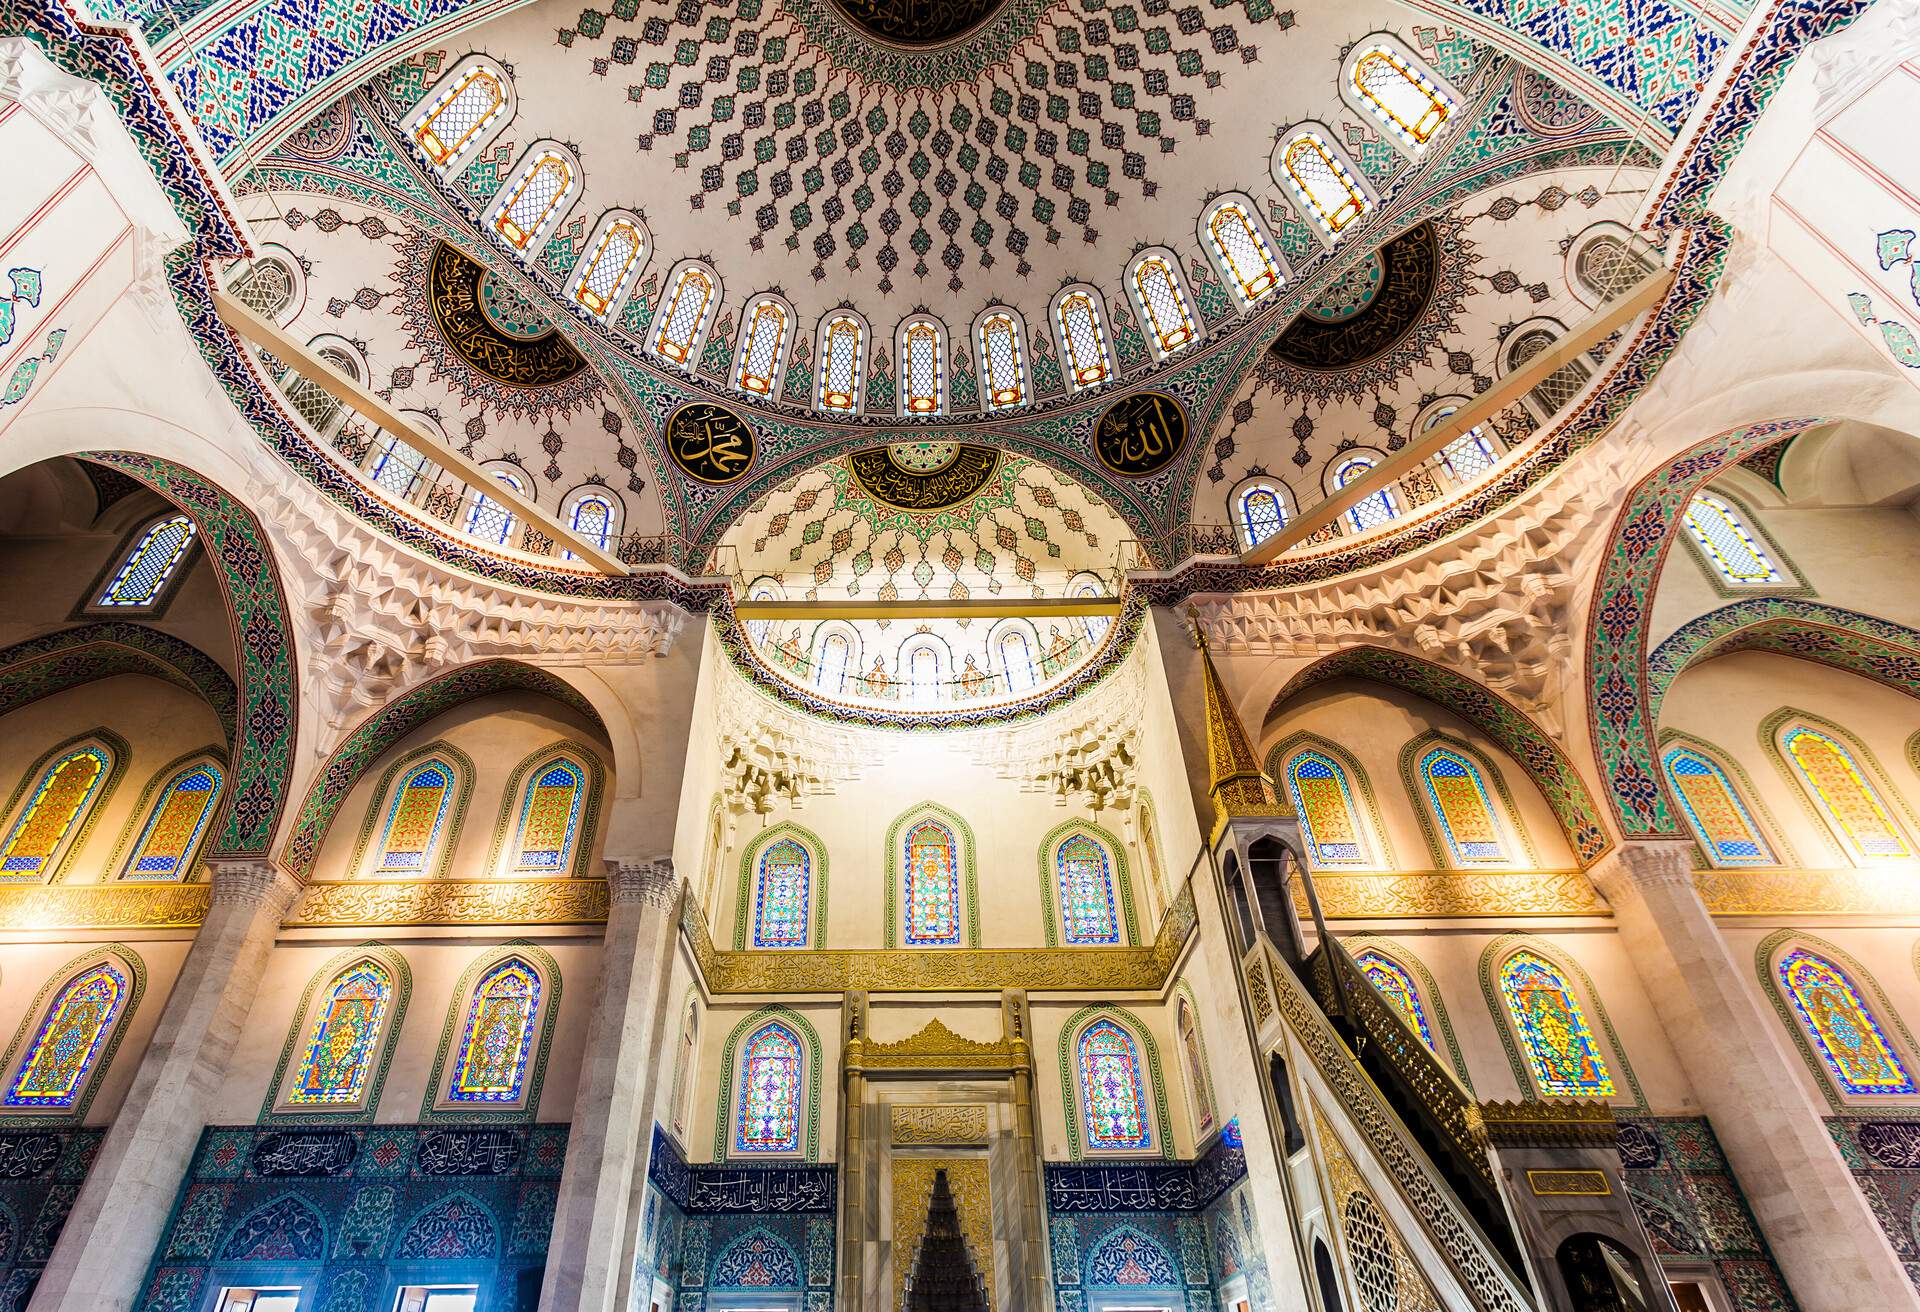 Inside view of domes of Kocatepe mosque in Ankara - Turkey.